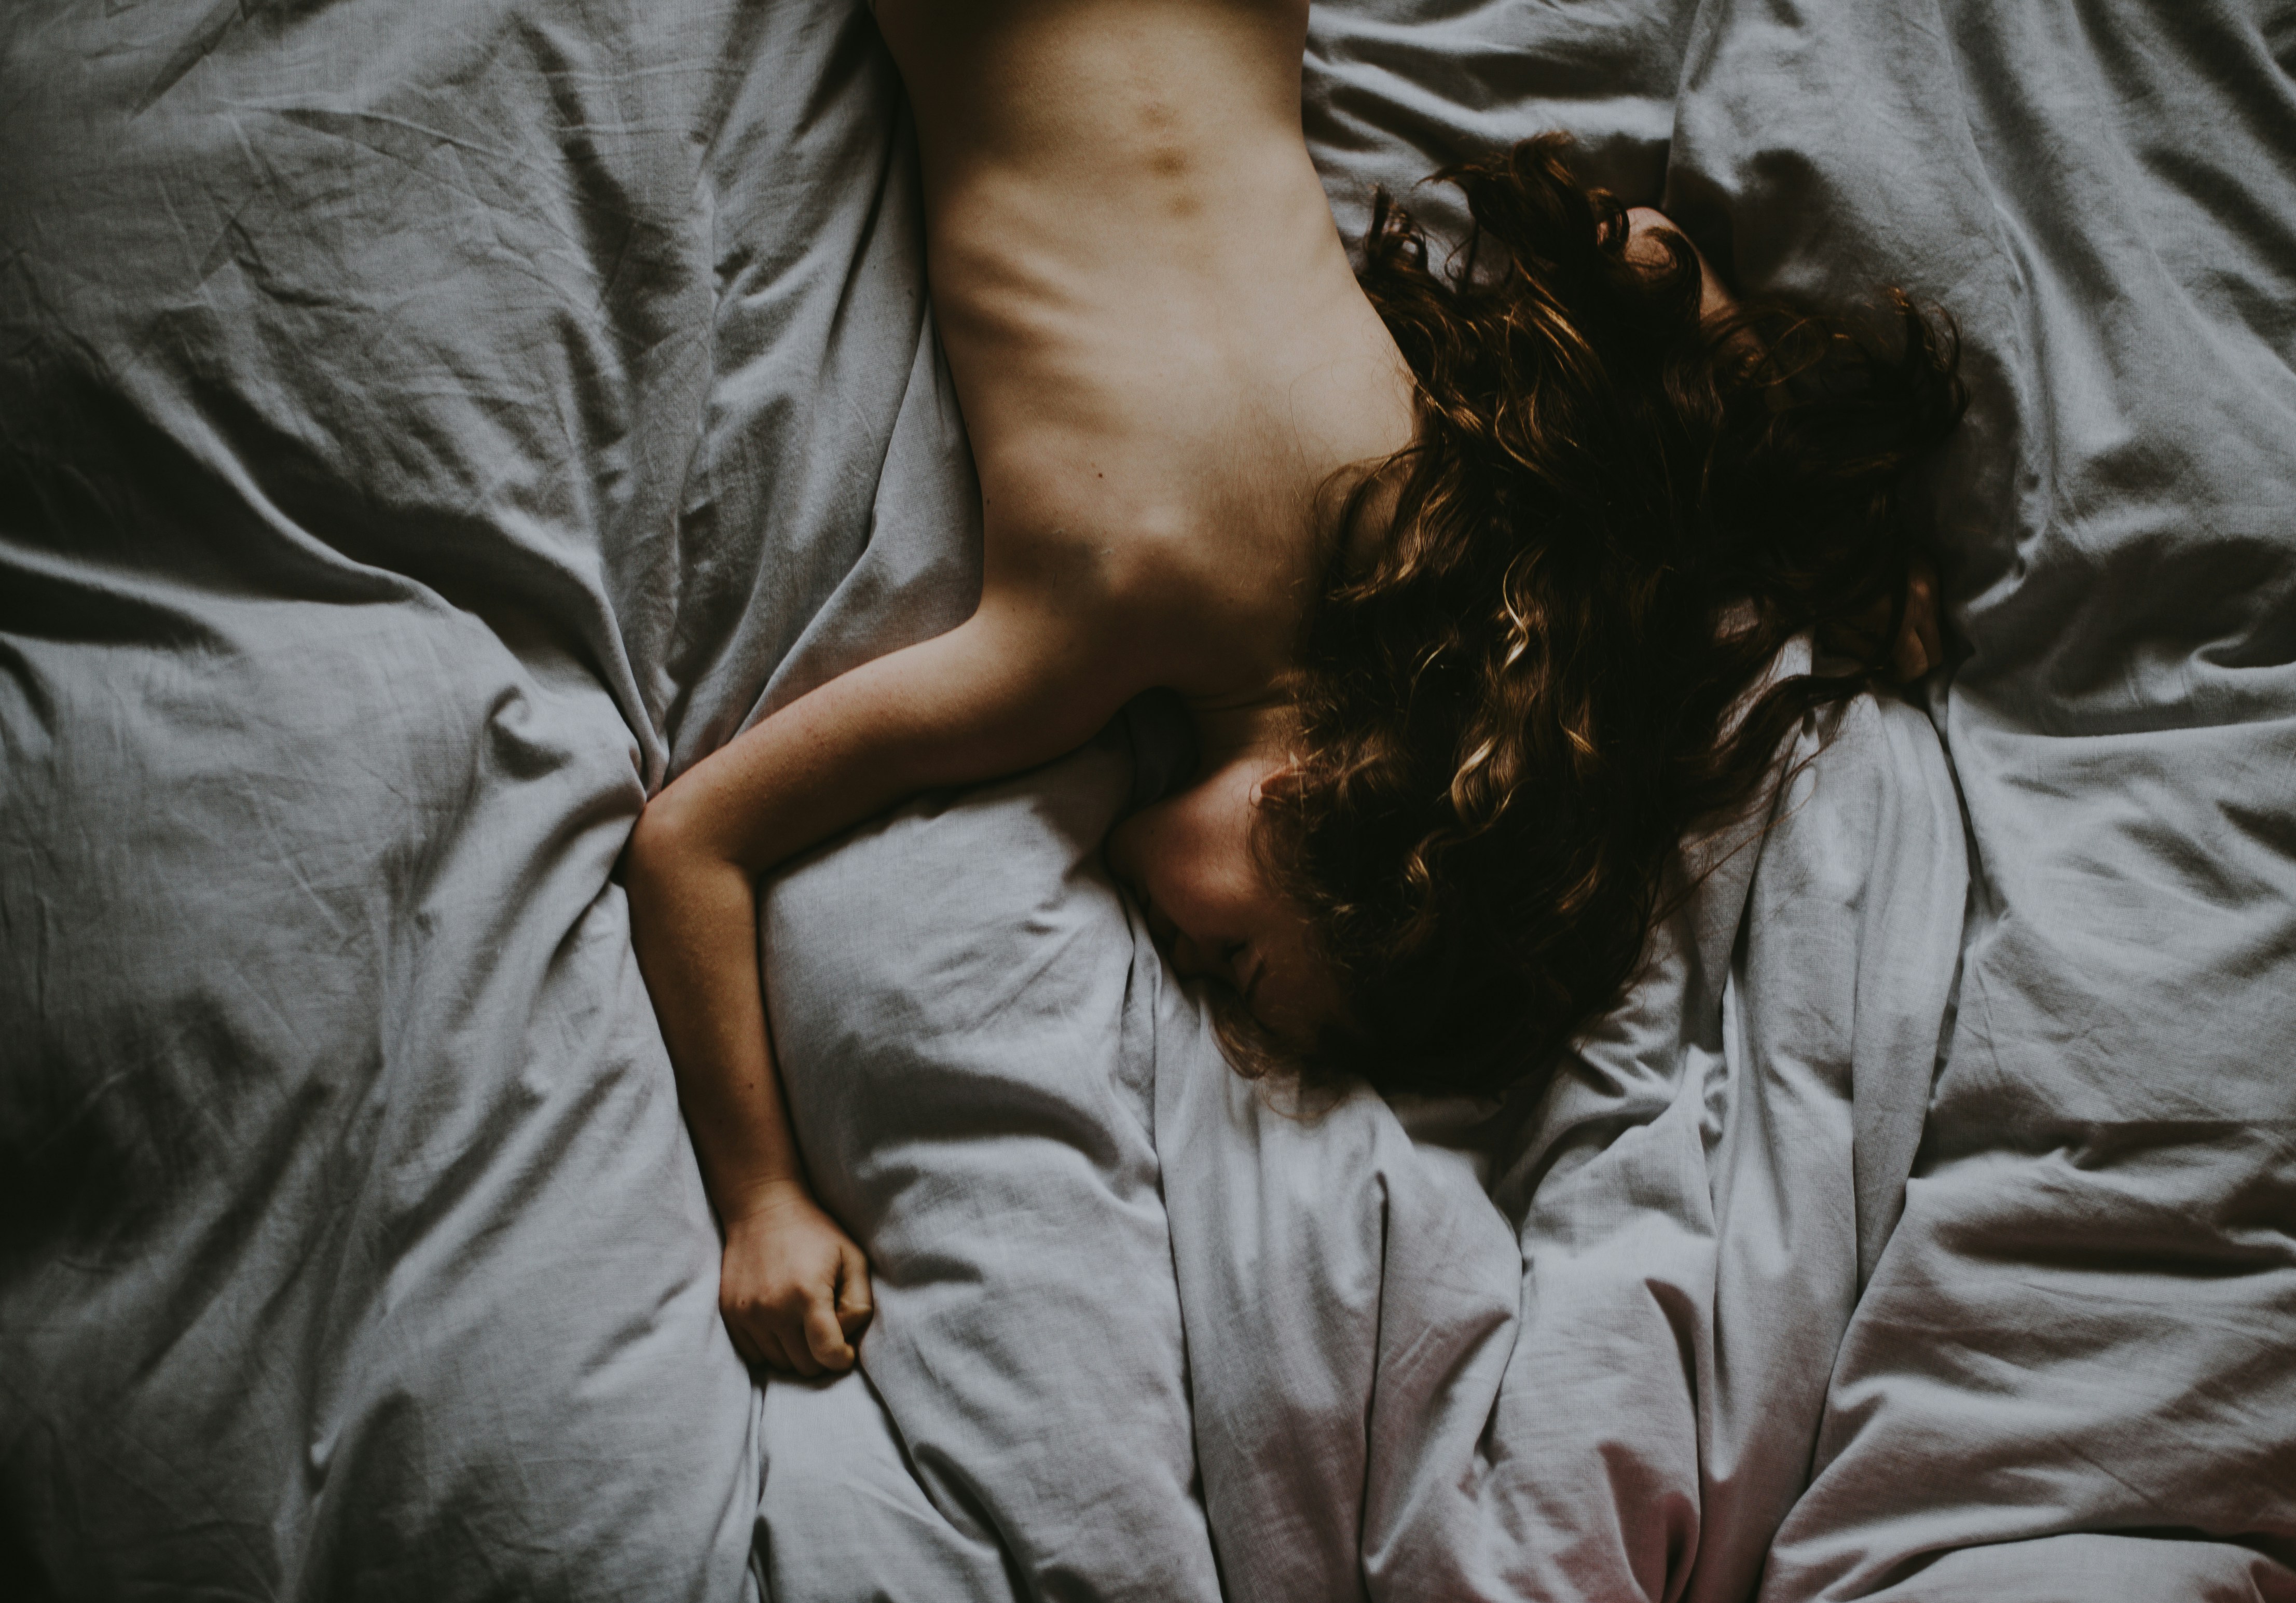 avedikian recommends girls sleeping nude pic